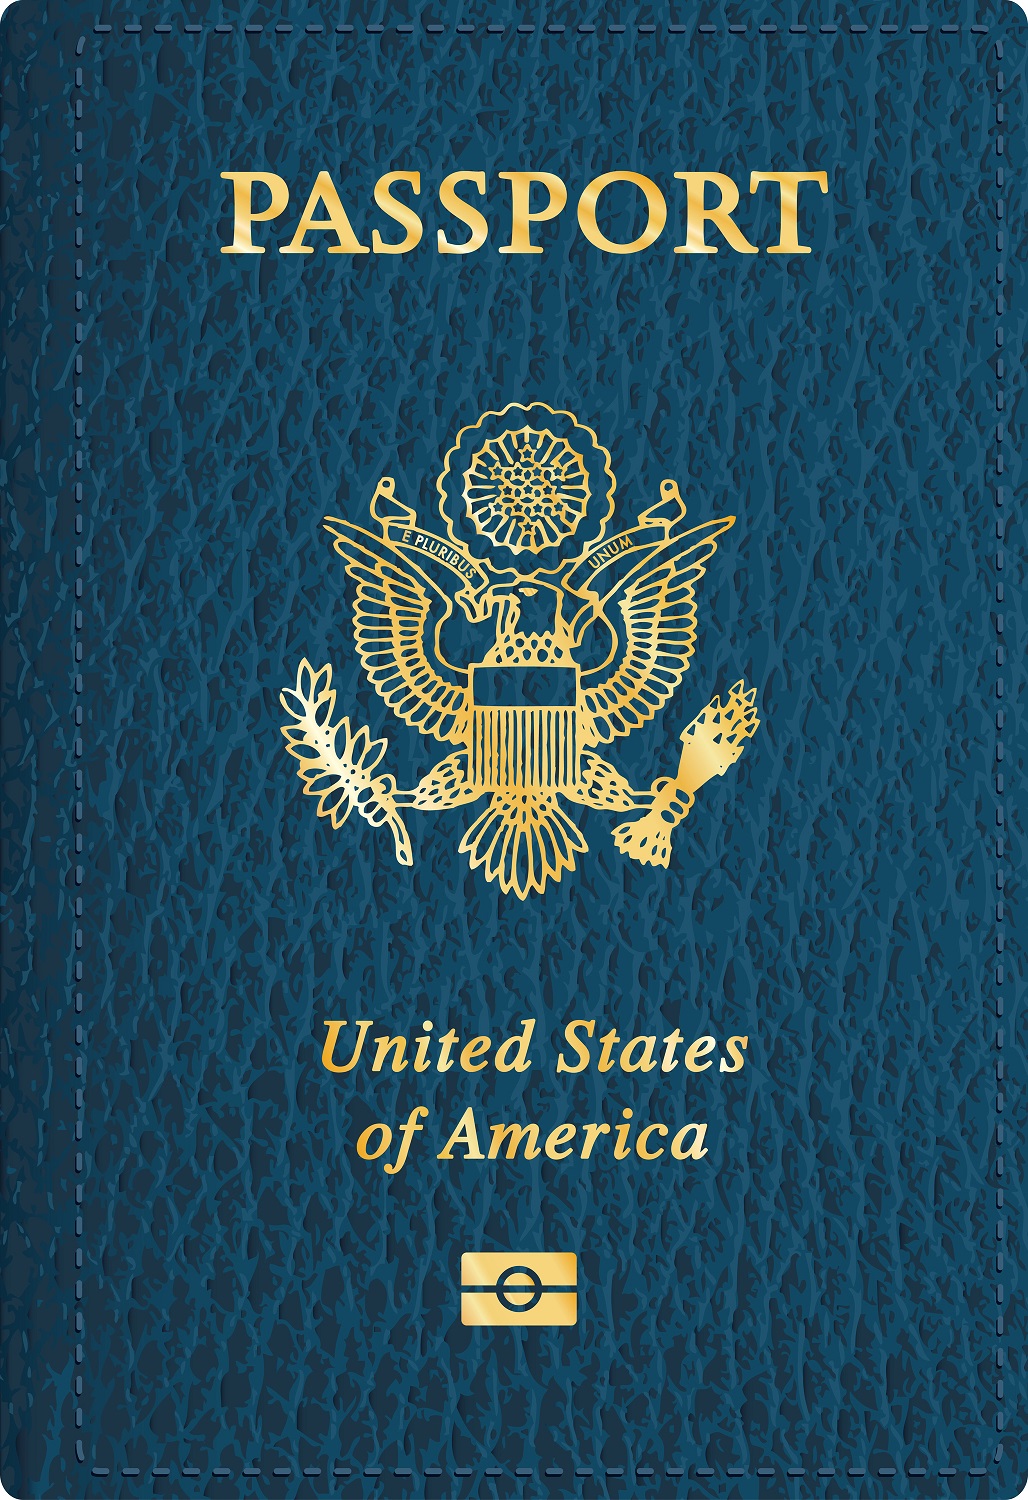 us passport renewal address